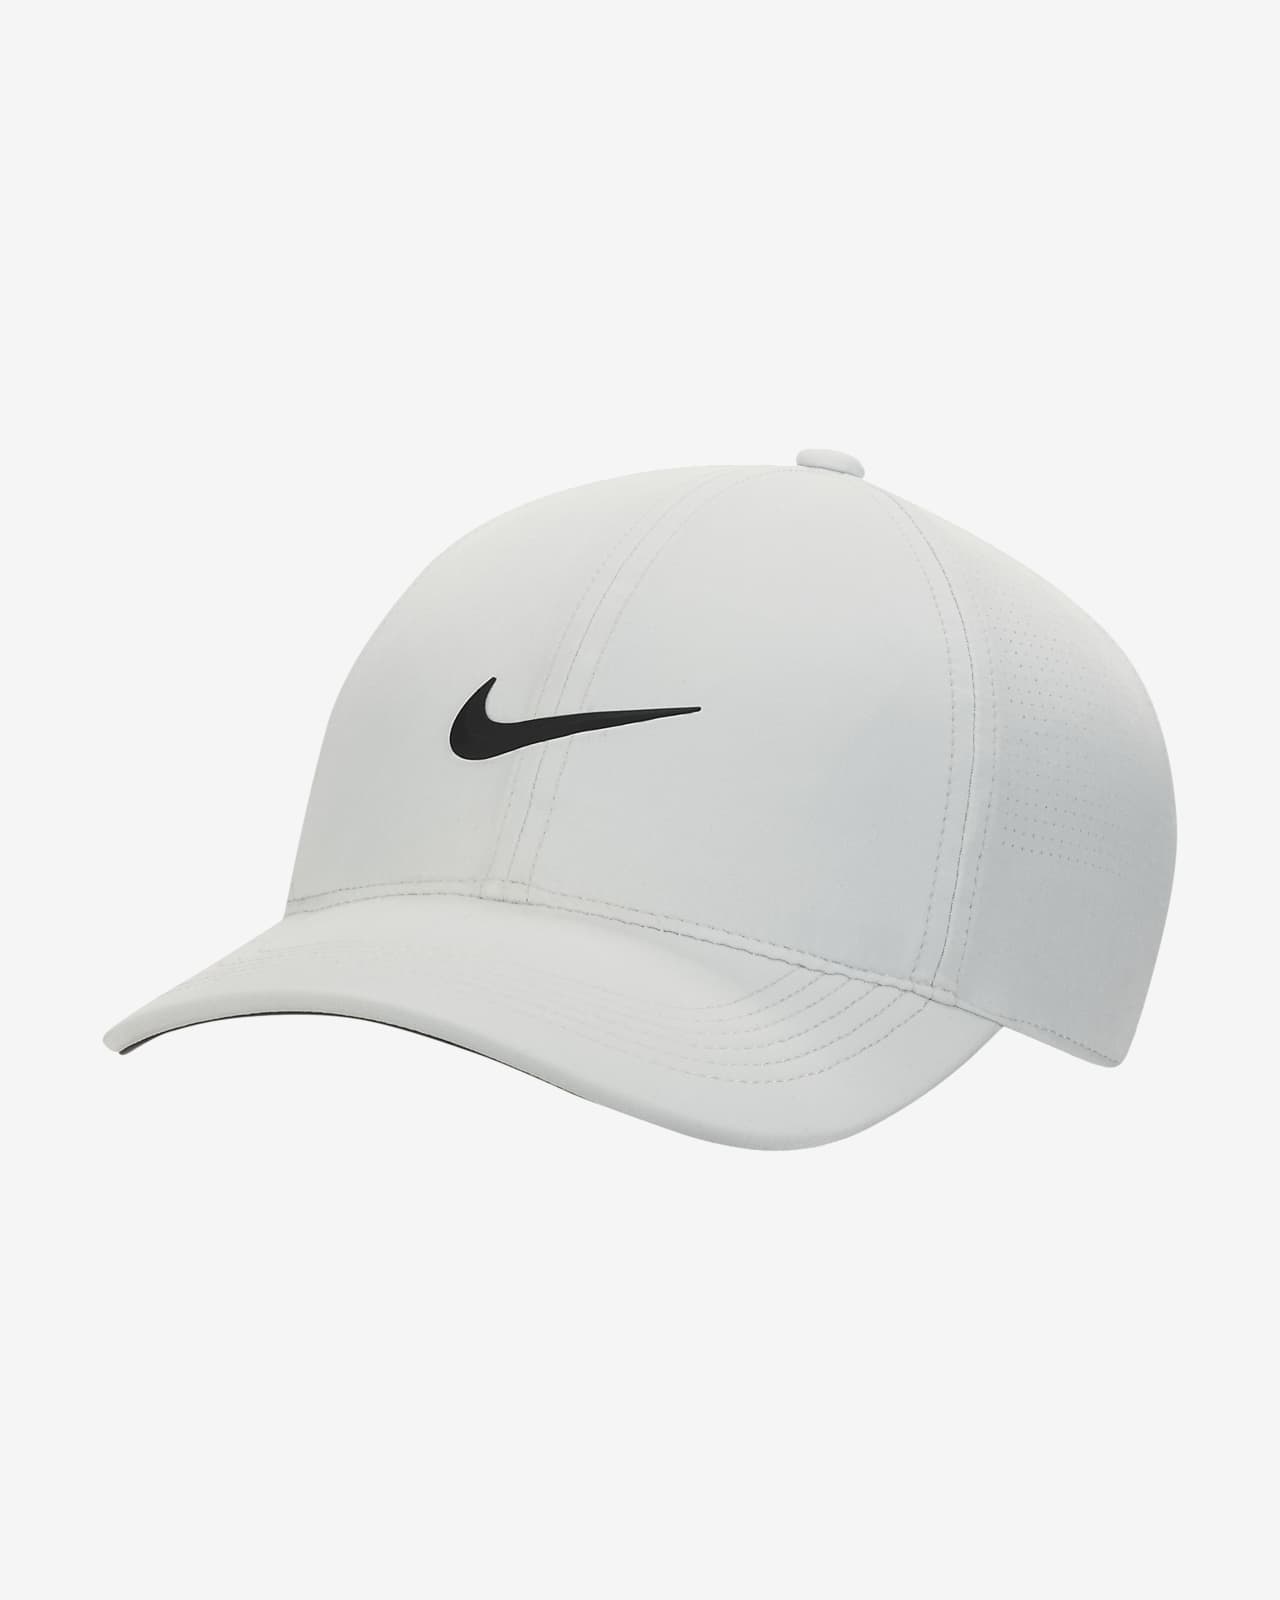 hale værdi Beskrive Nike Dri-FIT ADV AeroBill Heritage86 Women's Perforated Golf Hat. Nike ID